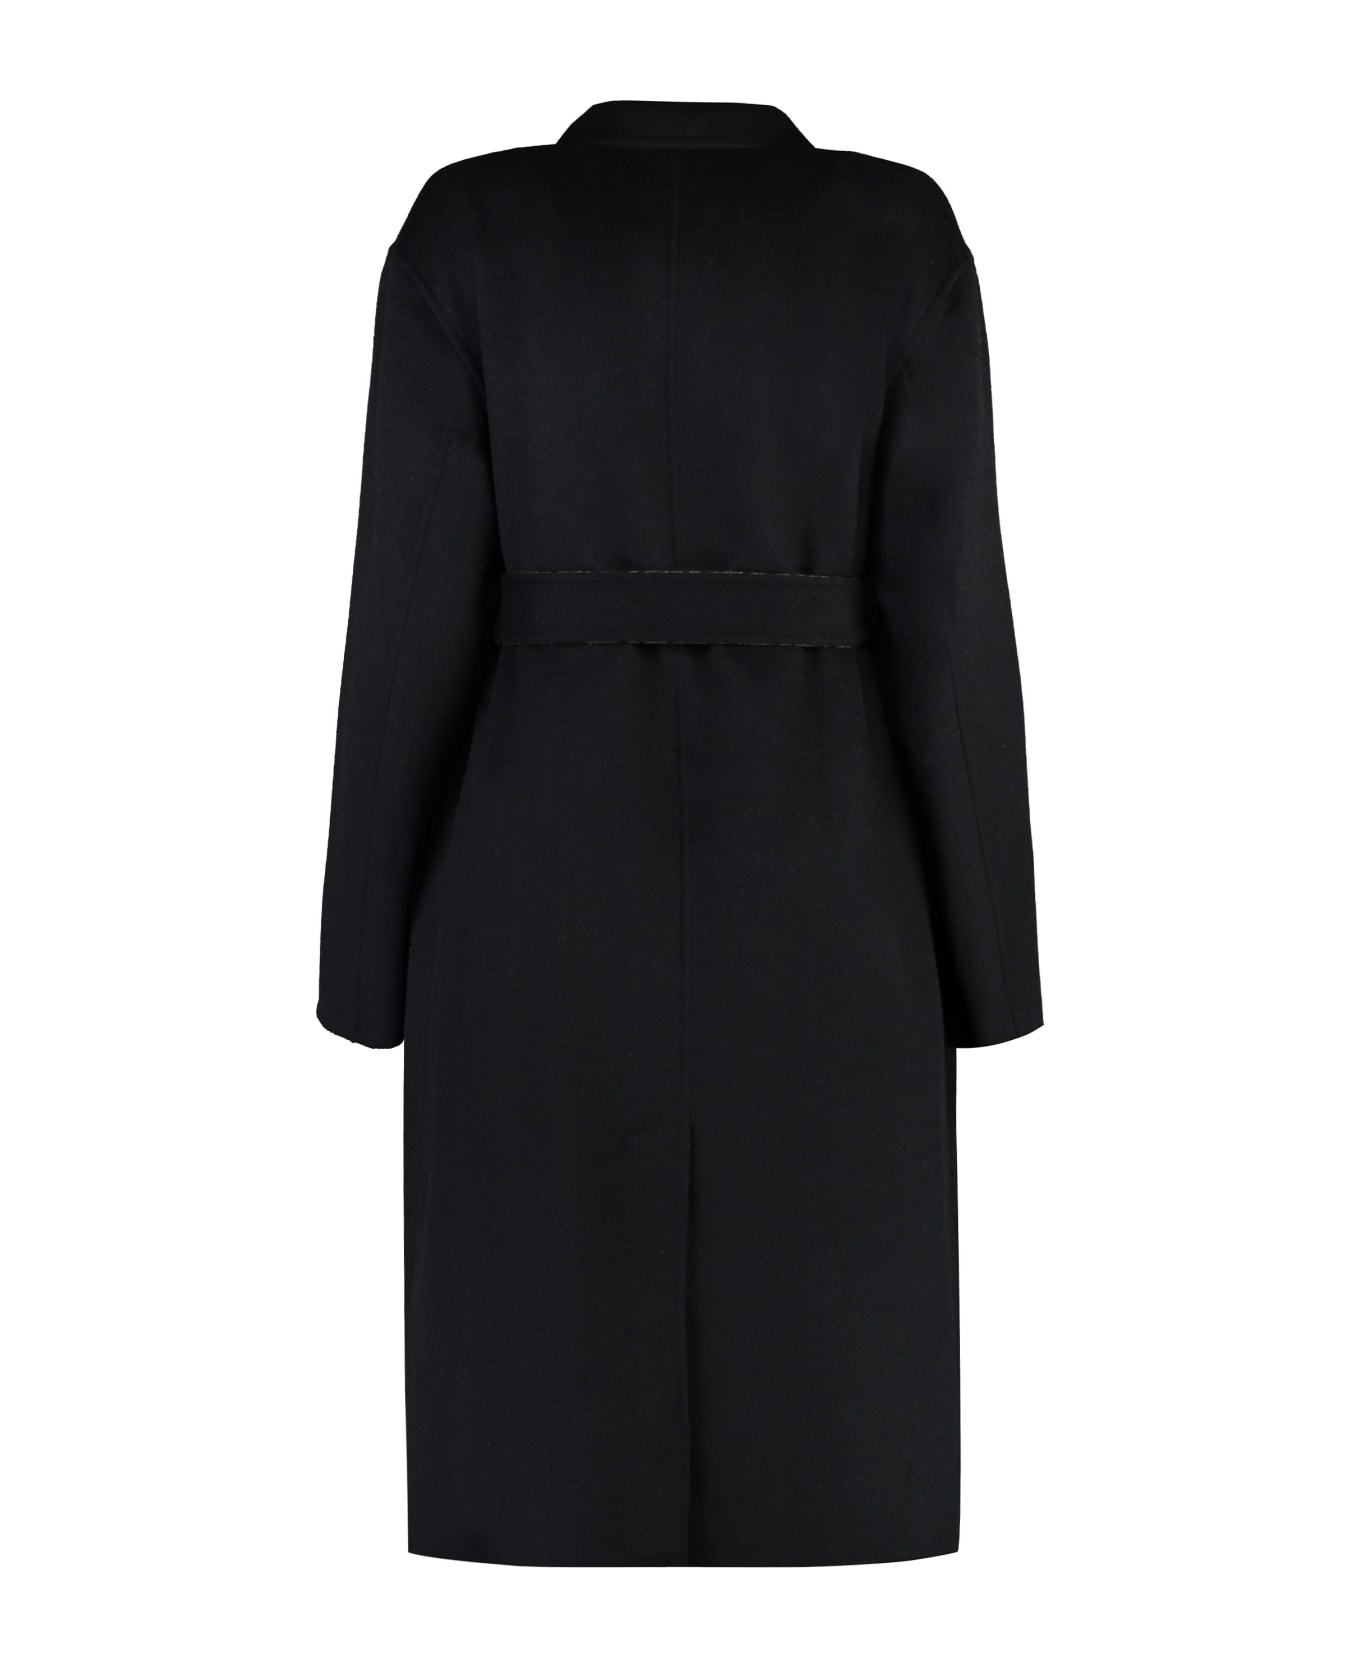 Hugo Boss Wool Blend Double-breasted Coat - black